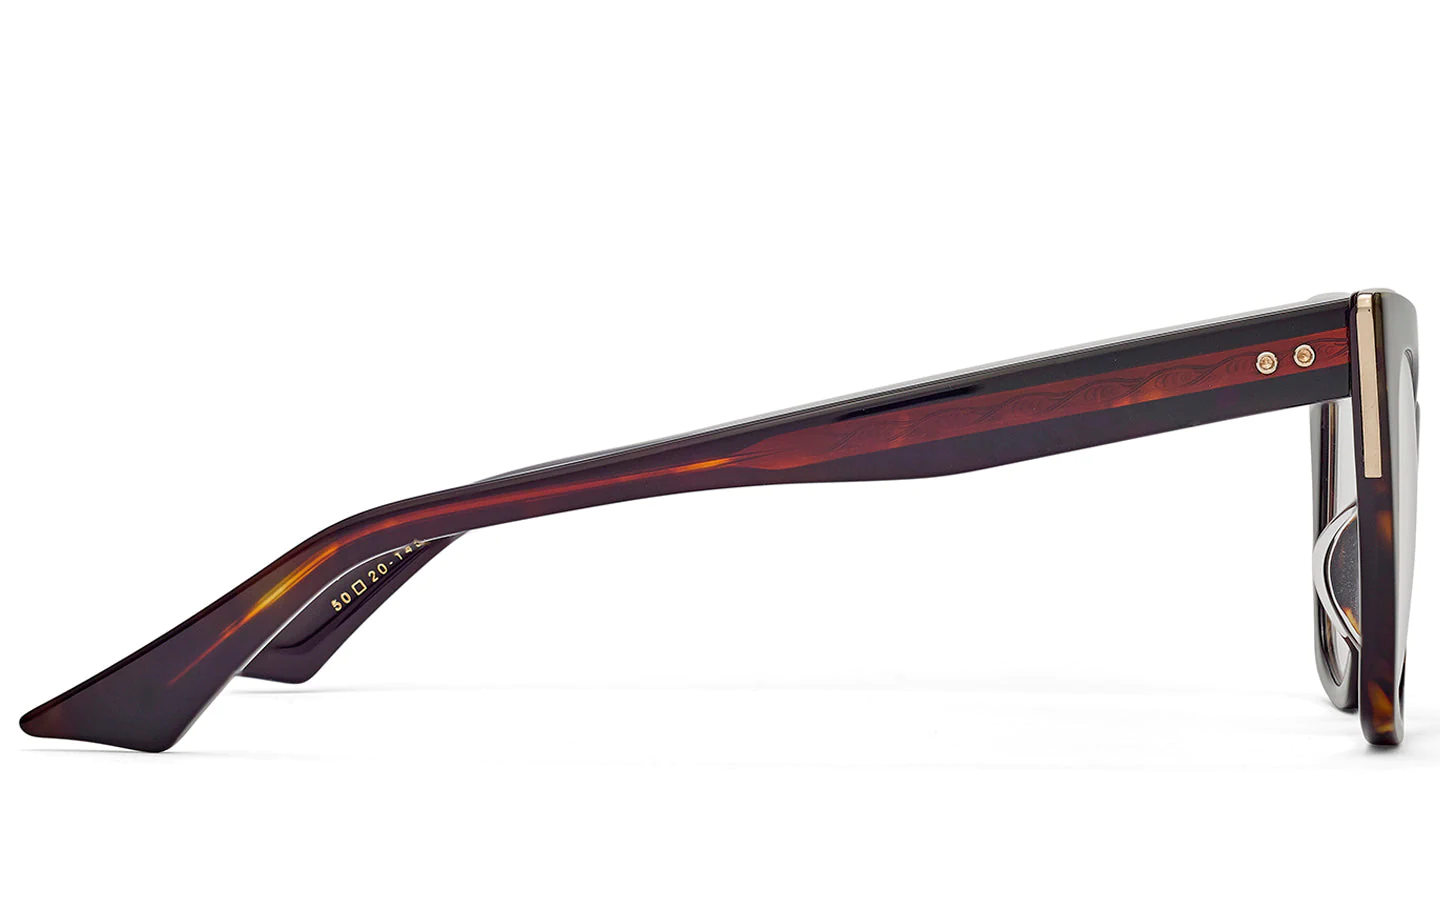 Dita Showgoer DTX513-50-02-Z RX Eyeglasses